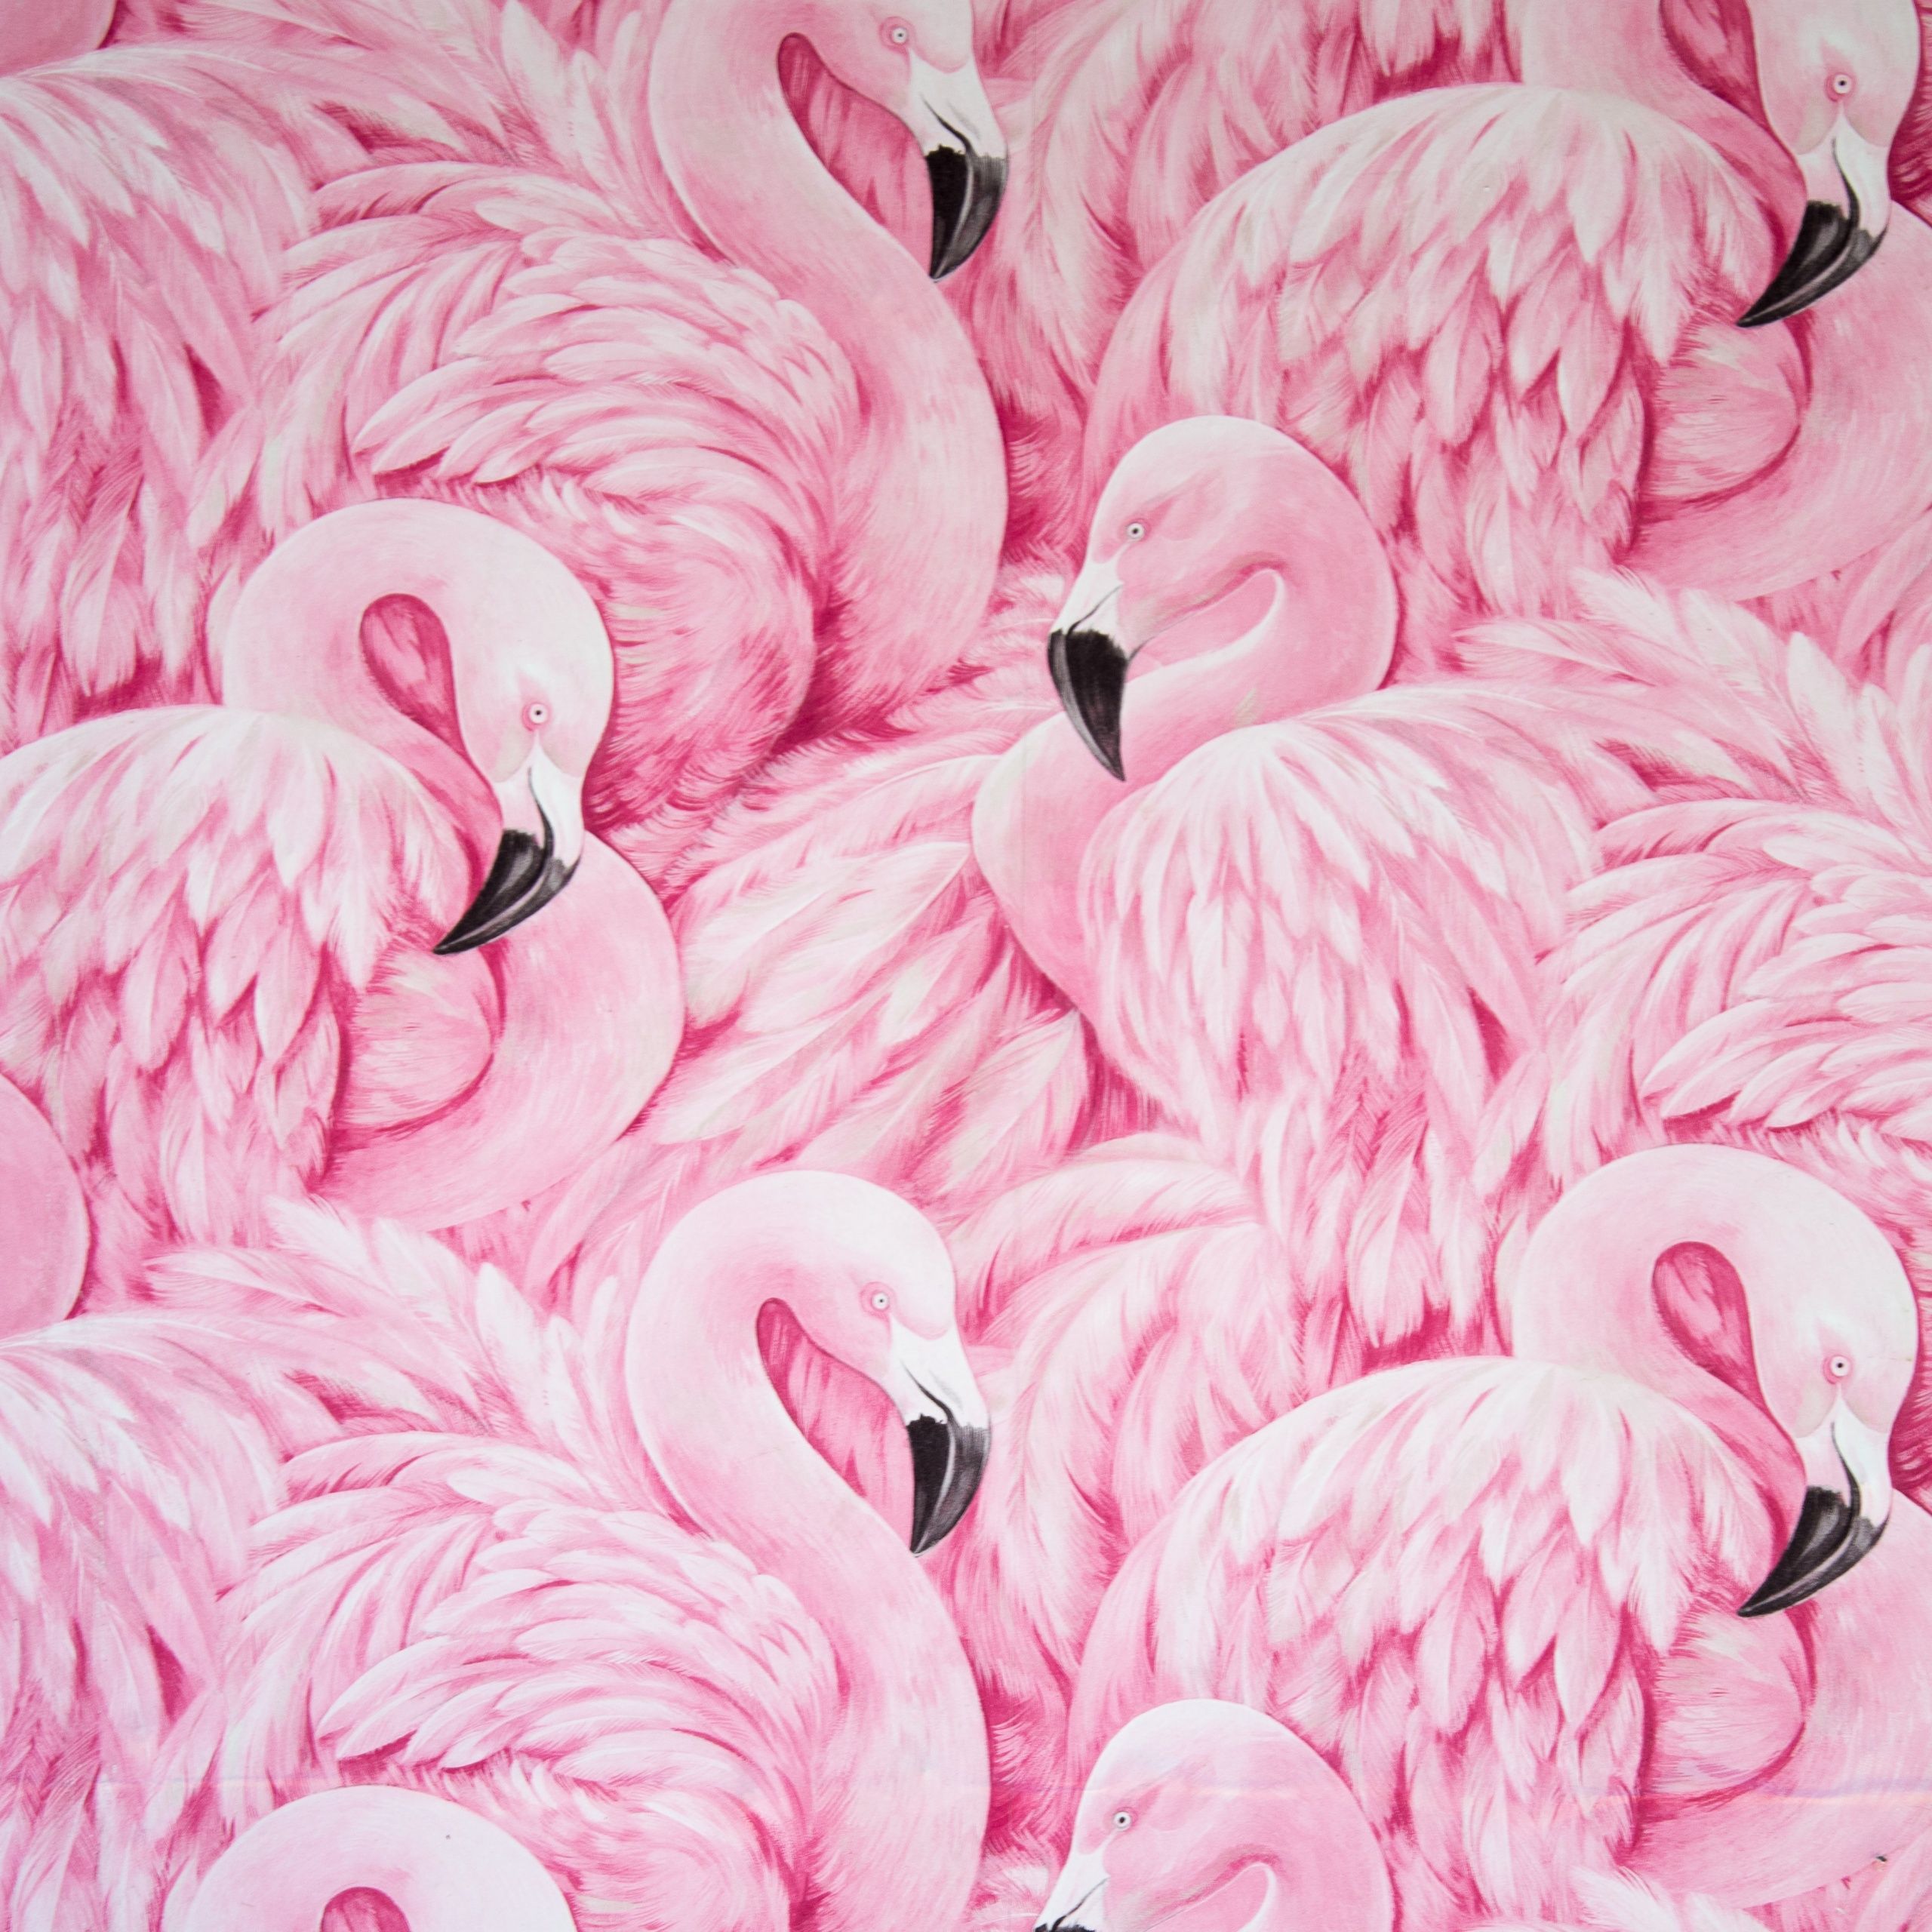 Pink Flamingos Wallpaper 4K, Painting, Feathers, Beautiful